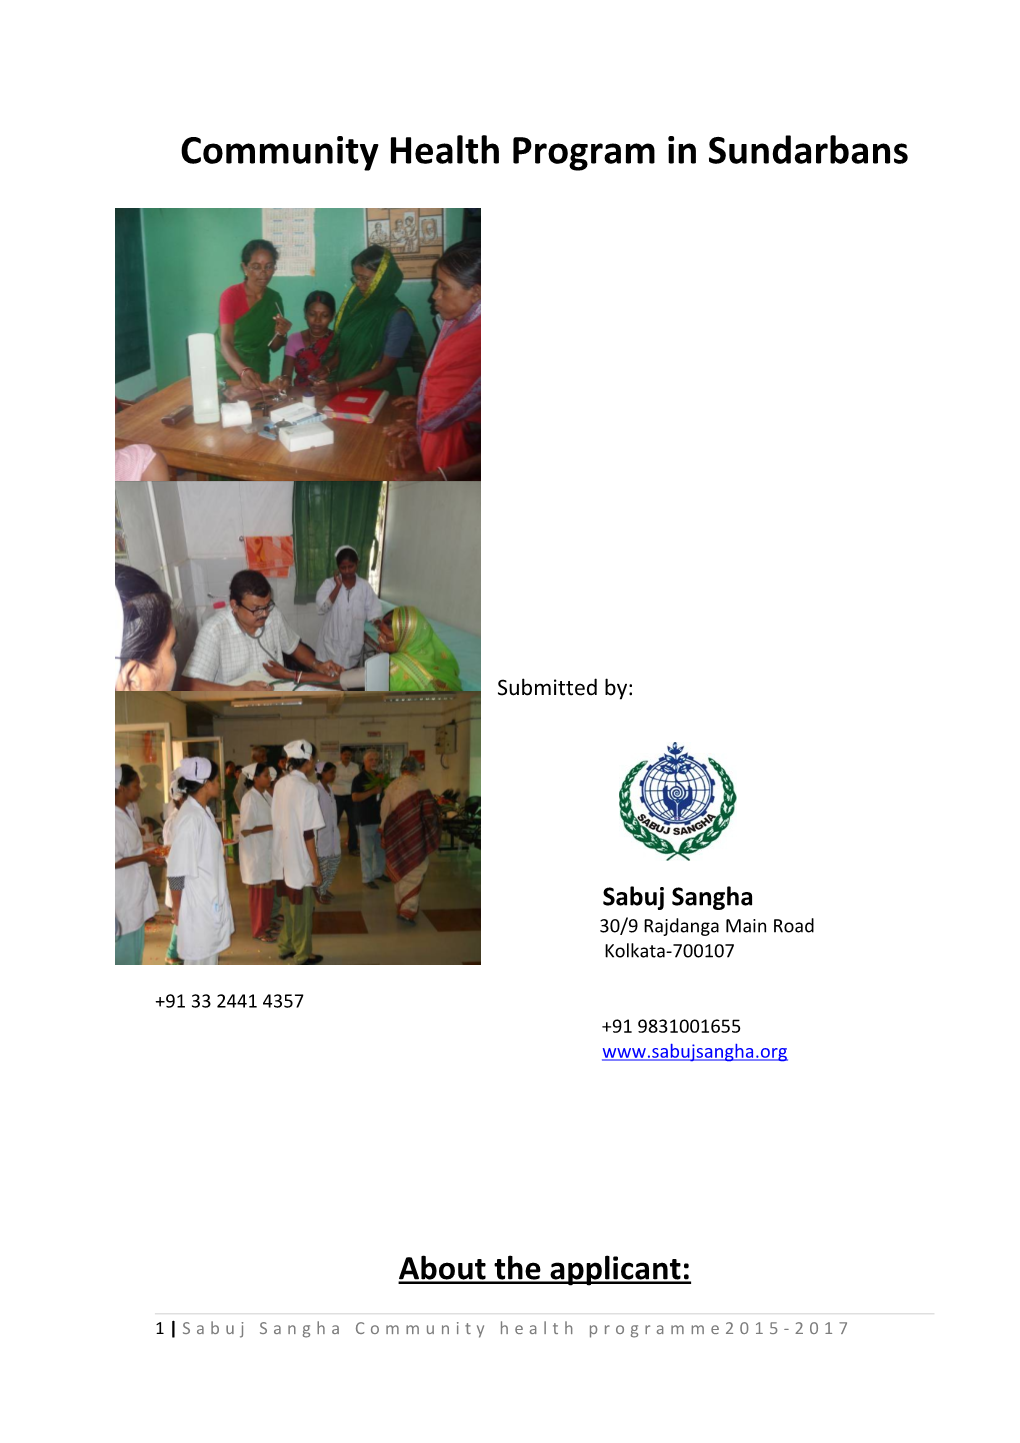 Project Proposal - Community Health Program in Sundarbans